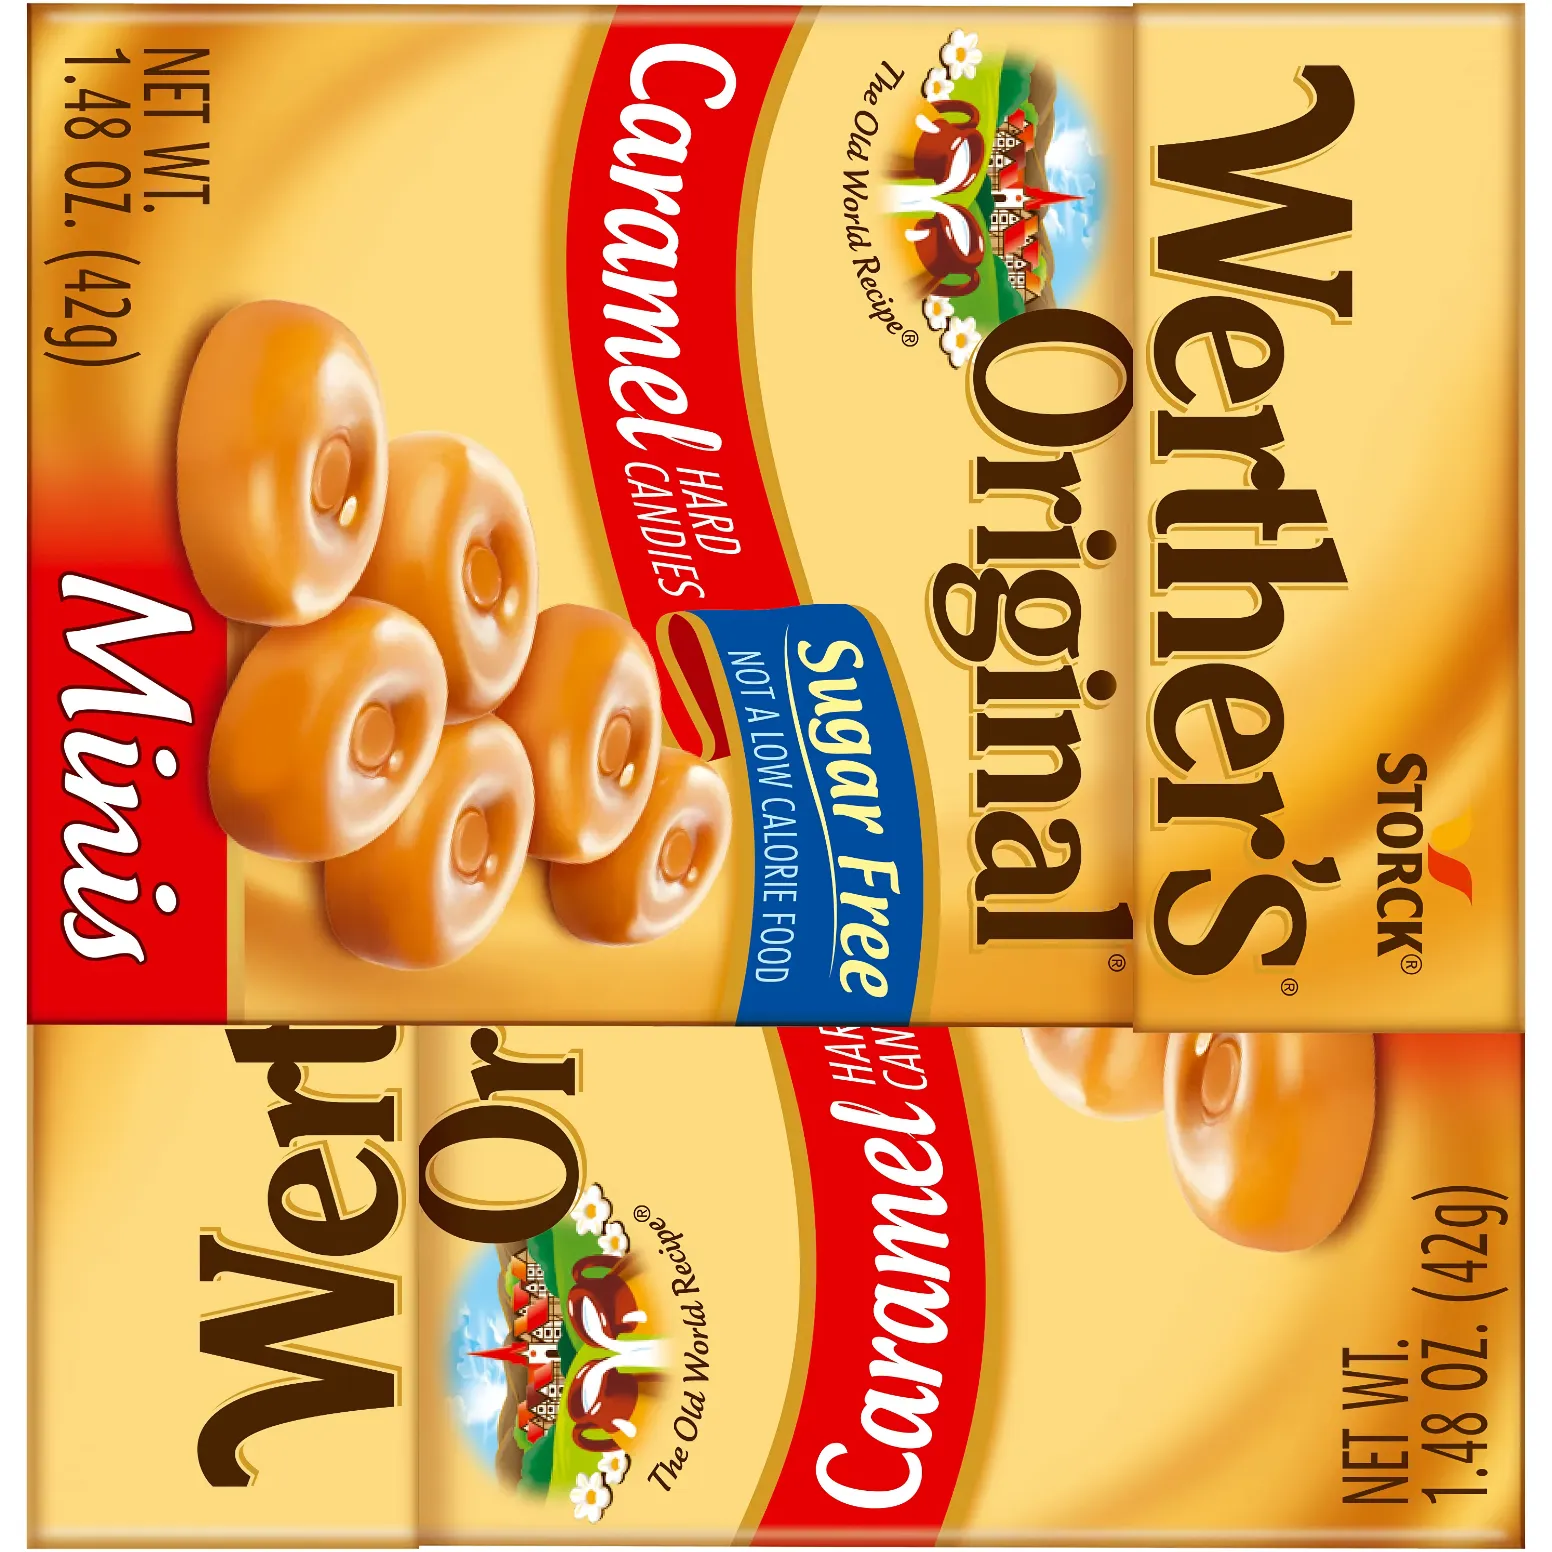 Free Werther’s Caramel Minis After Cashback At Walmart